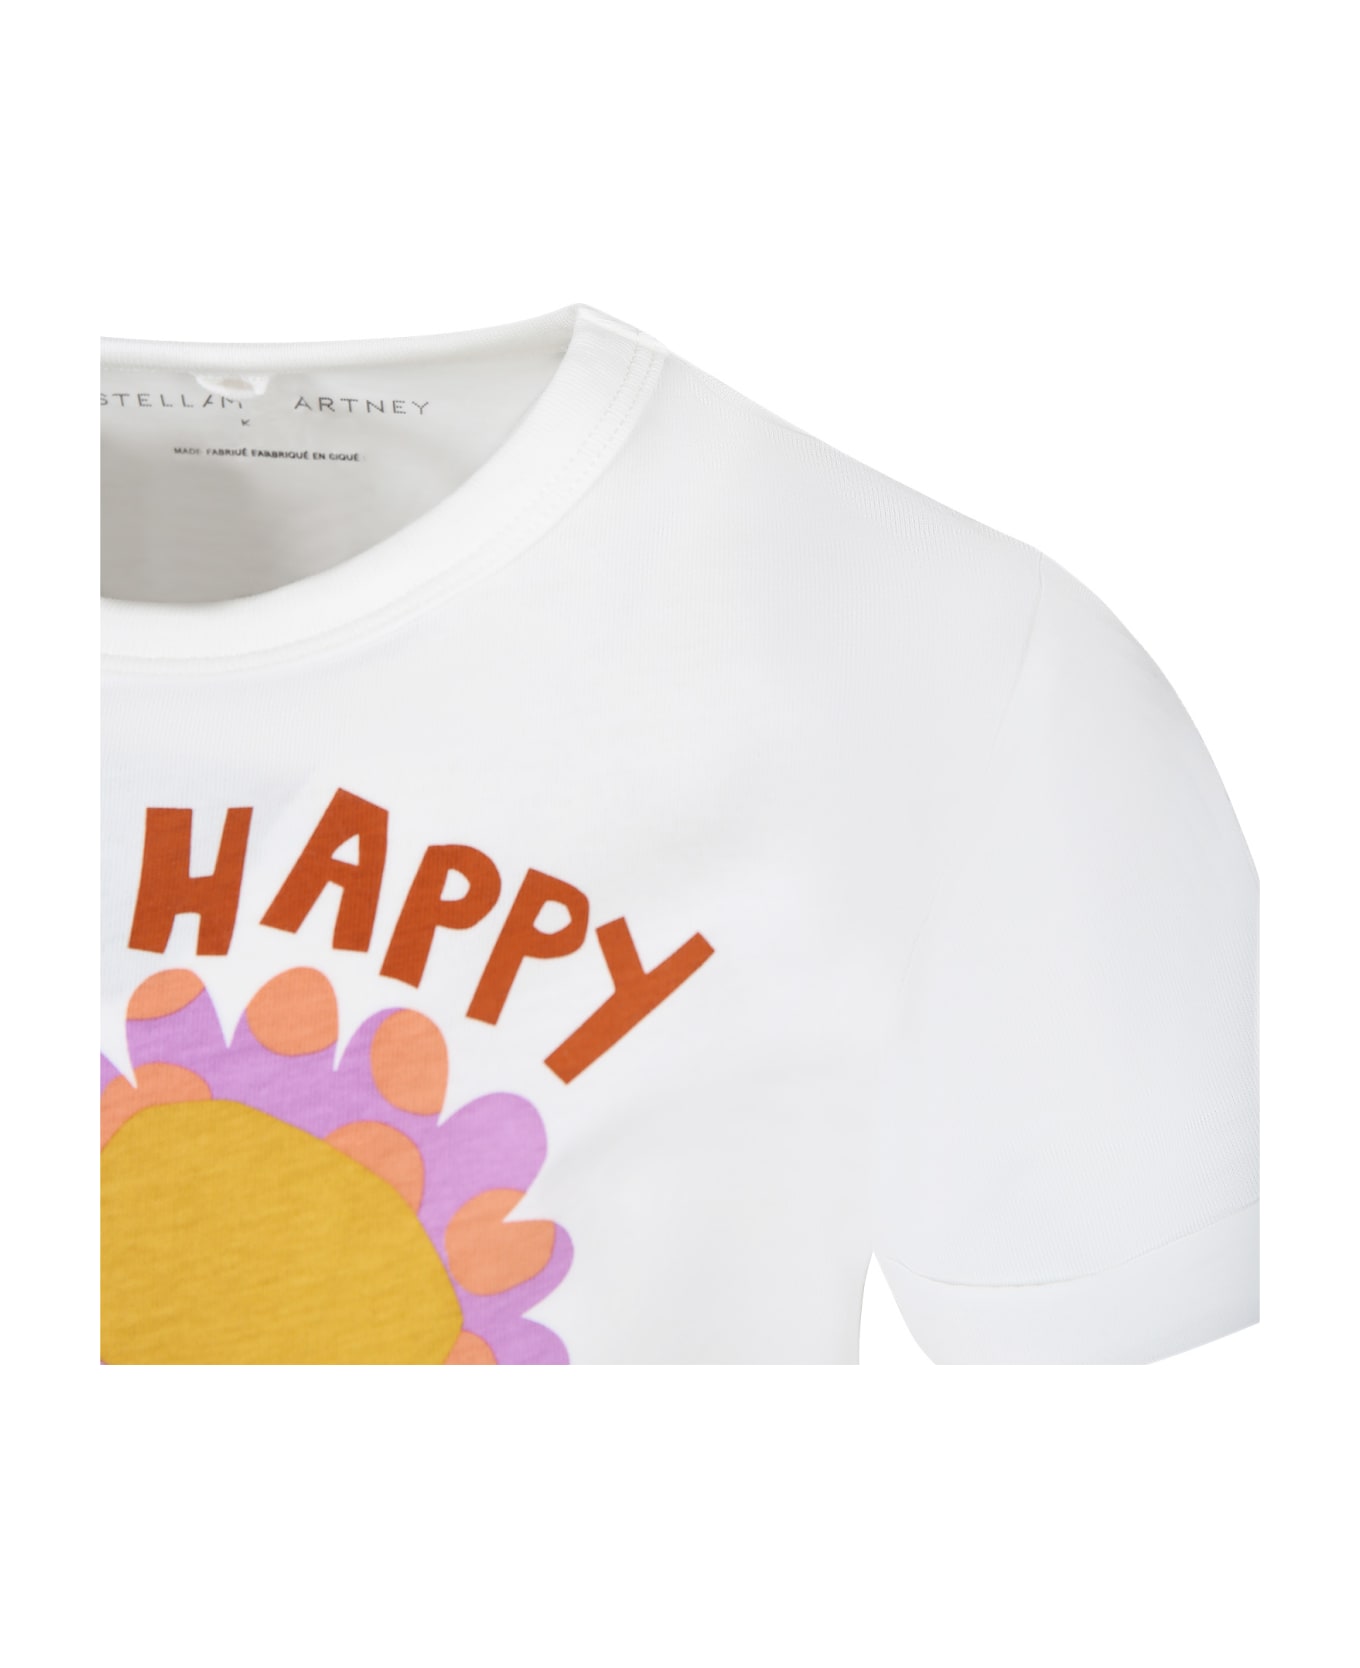 Stella McCartney Kids White T-shirt For Girl With Flower Print - Ivory